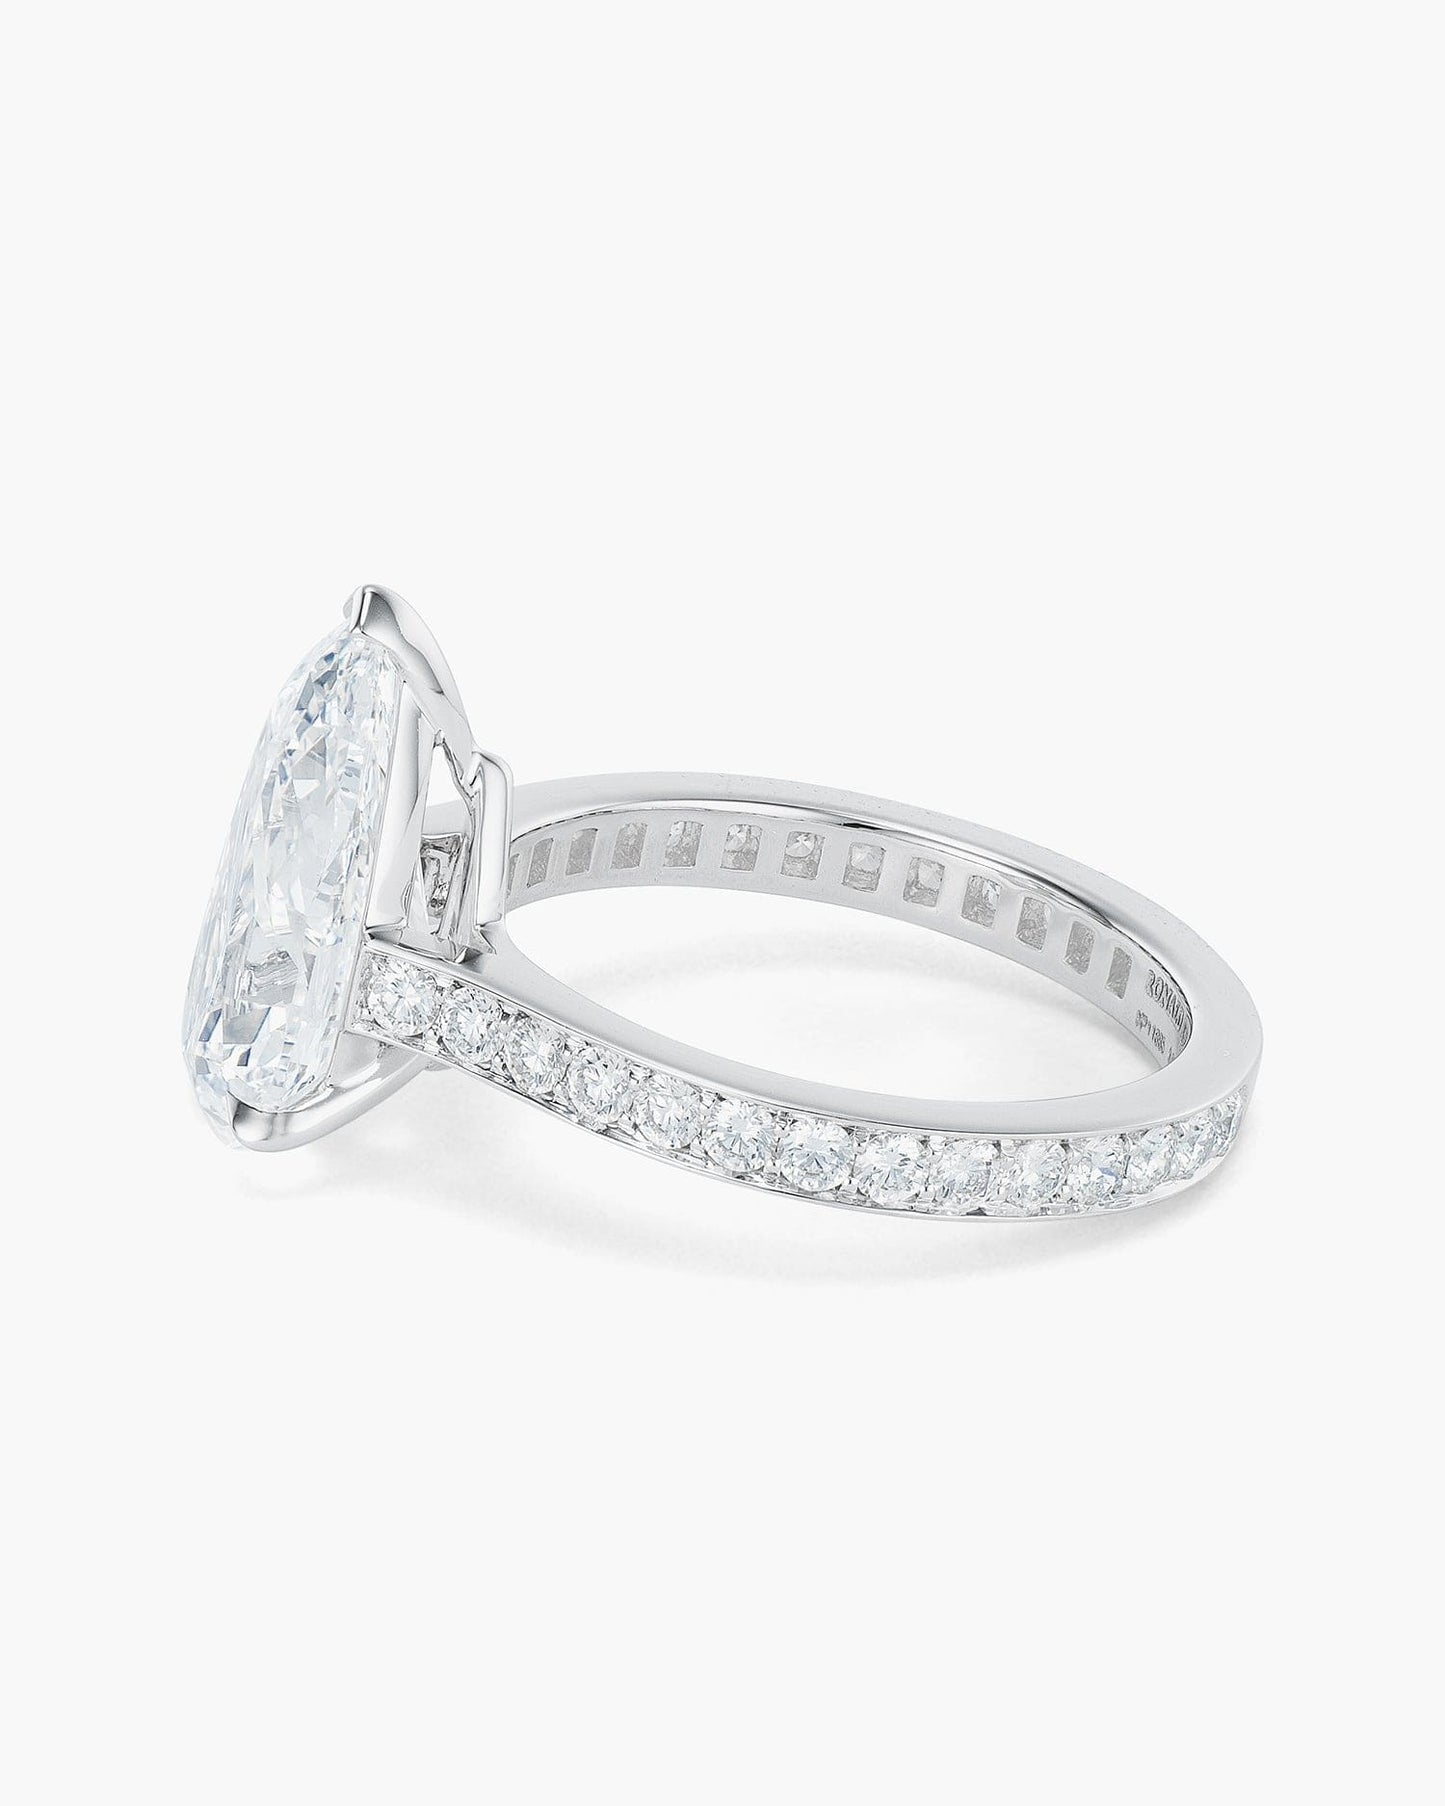 3.52 carat Pear Shape Diamond Ring